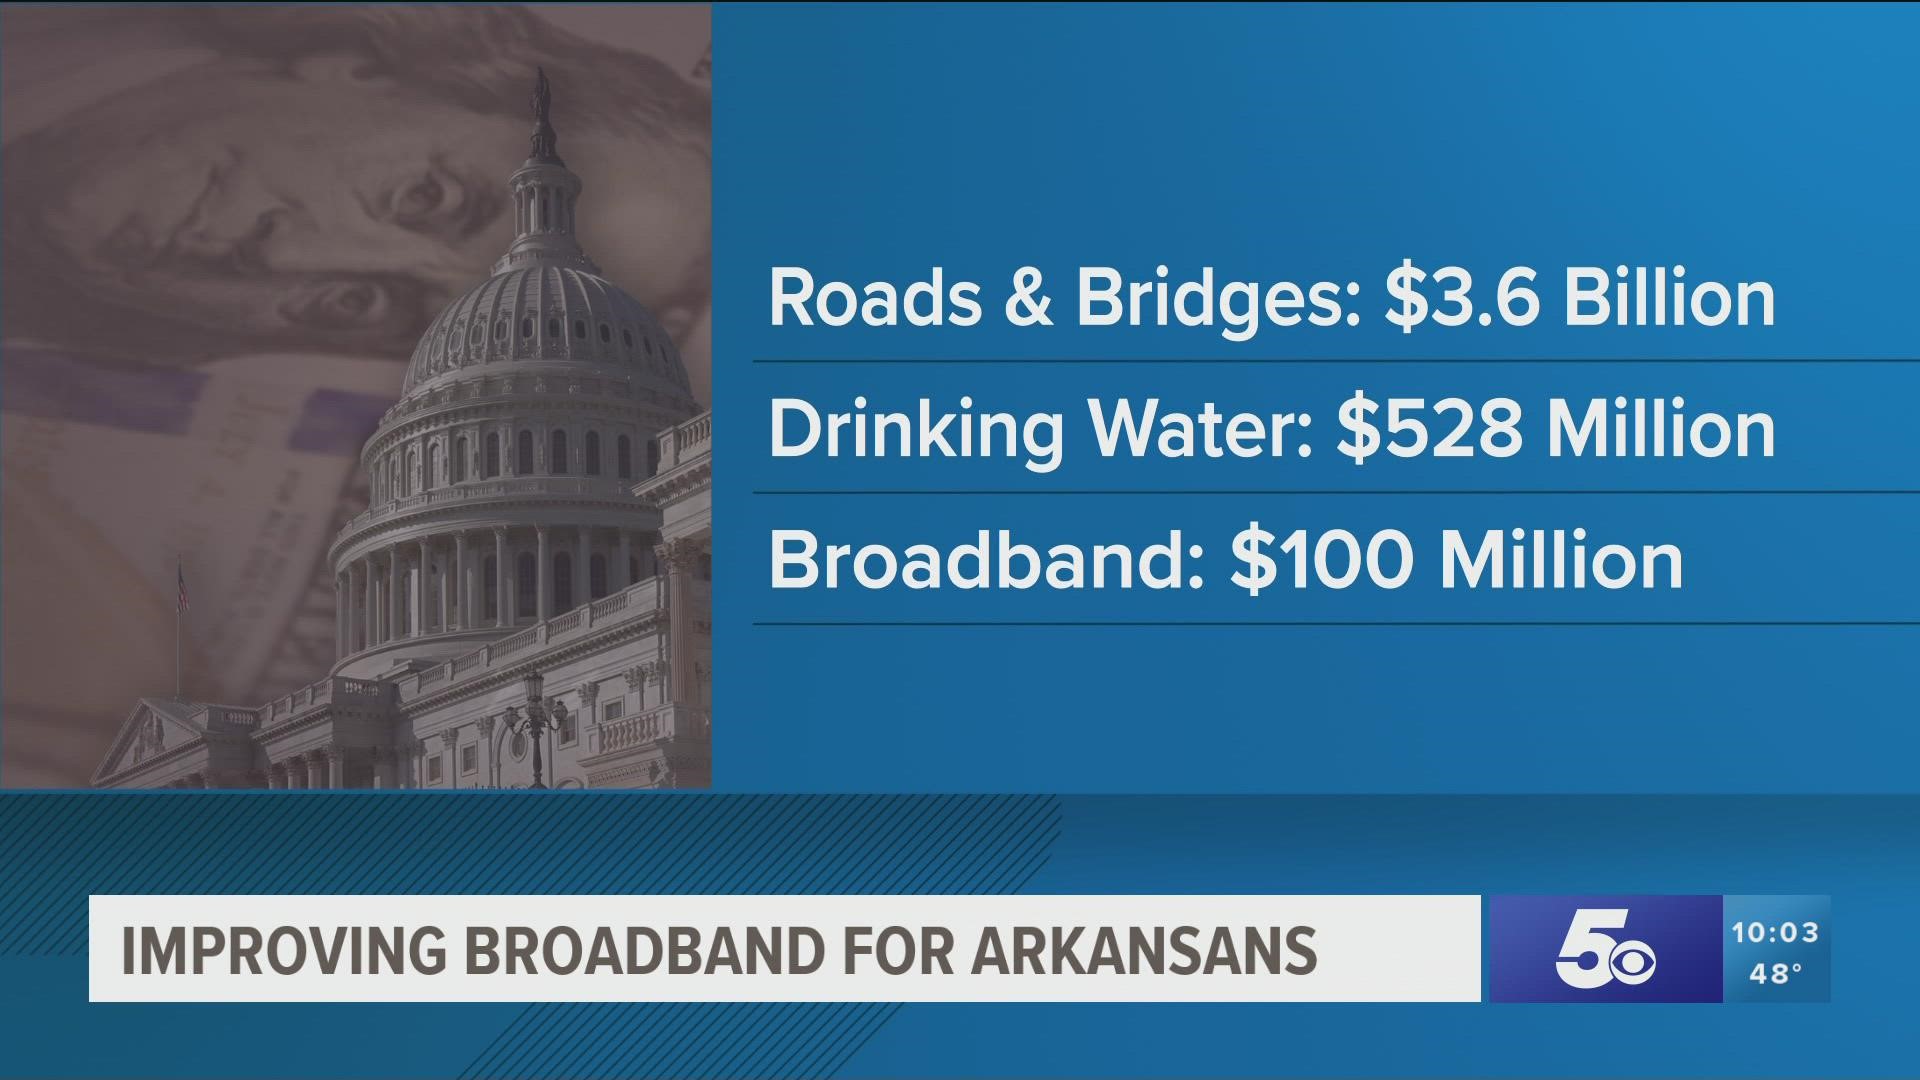 Arkansas will receive at least $100 million to provide broadband internet for all Arkansans.